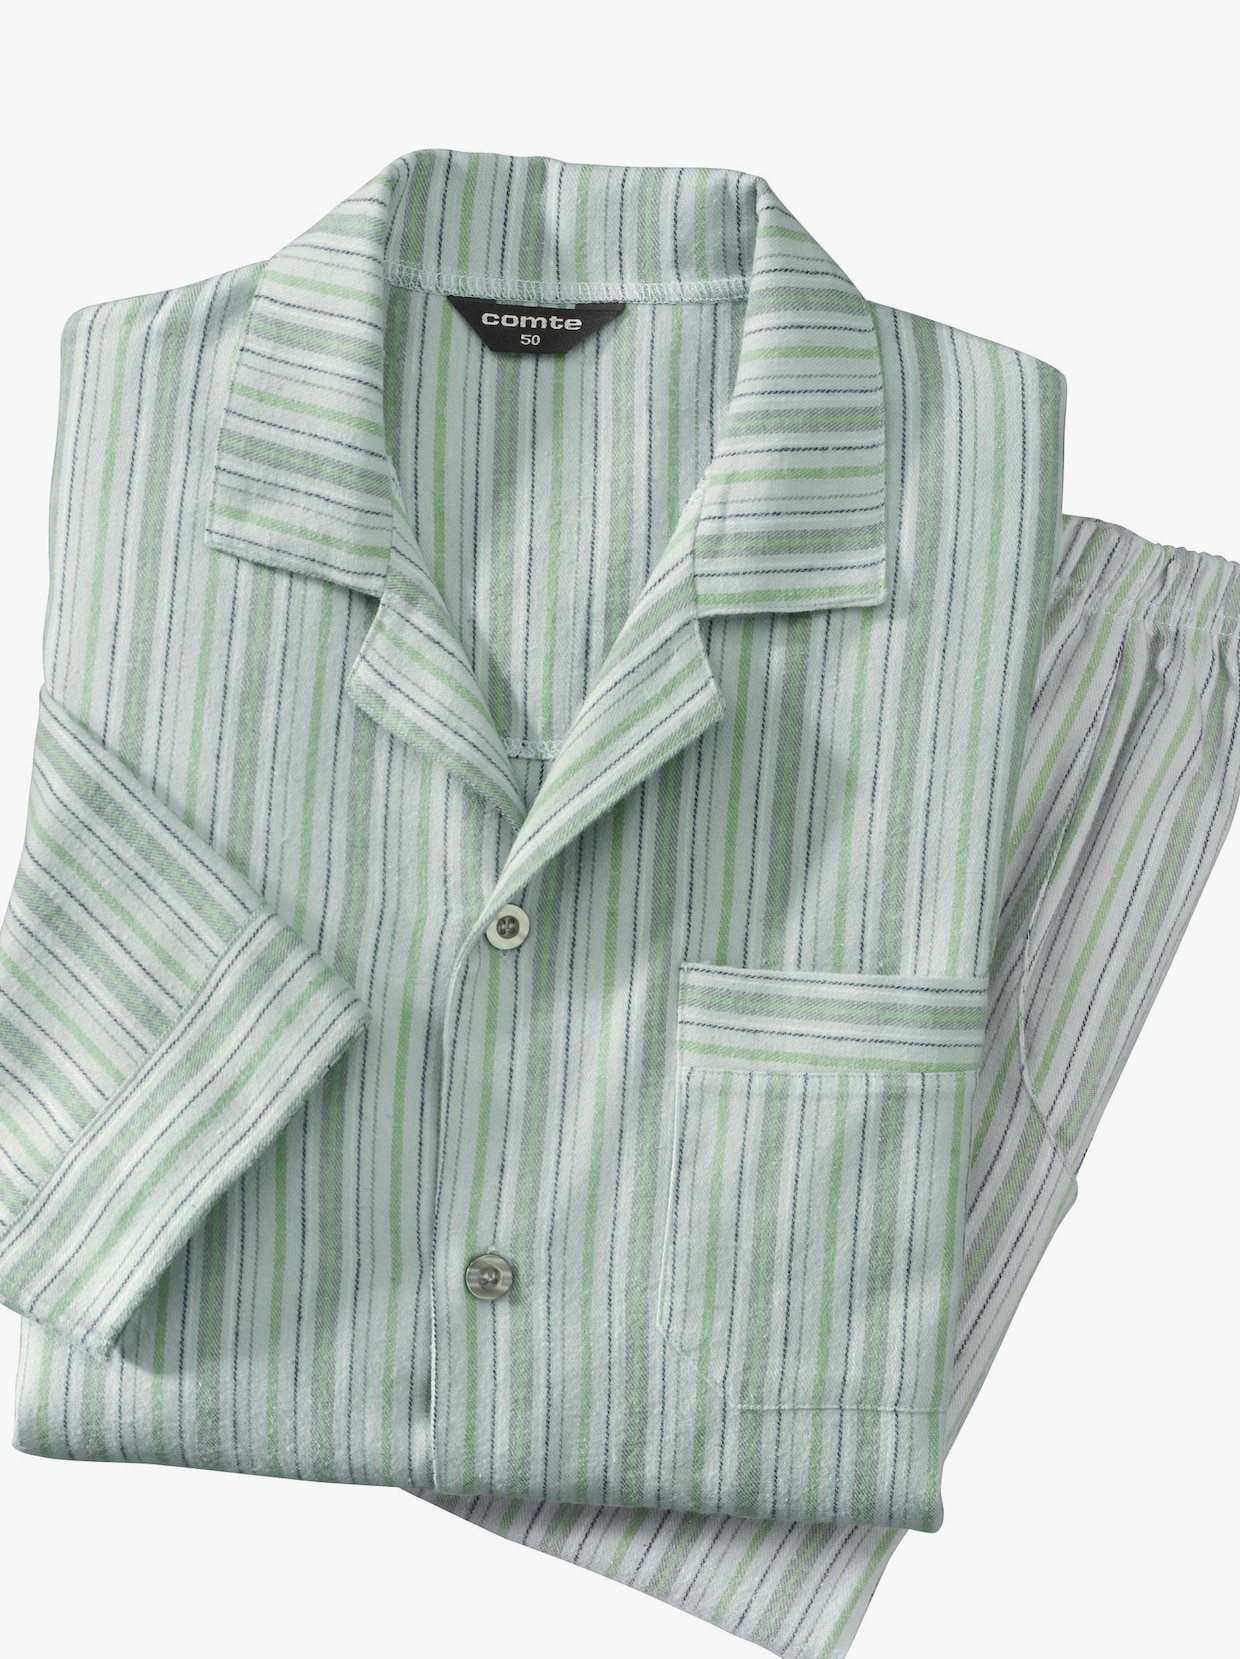 Comte Pyjamas - grön, randig